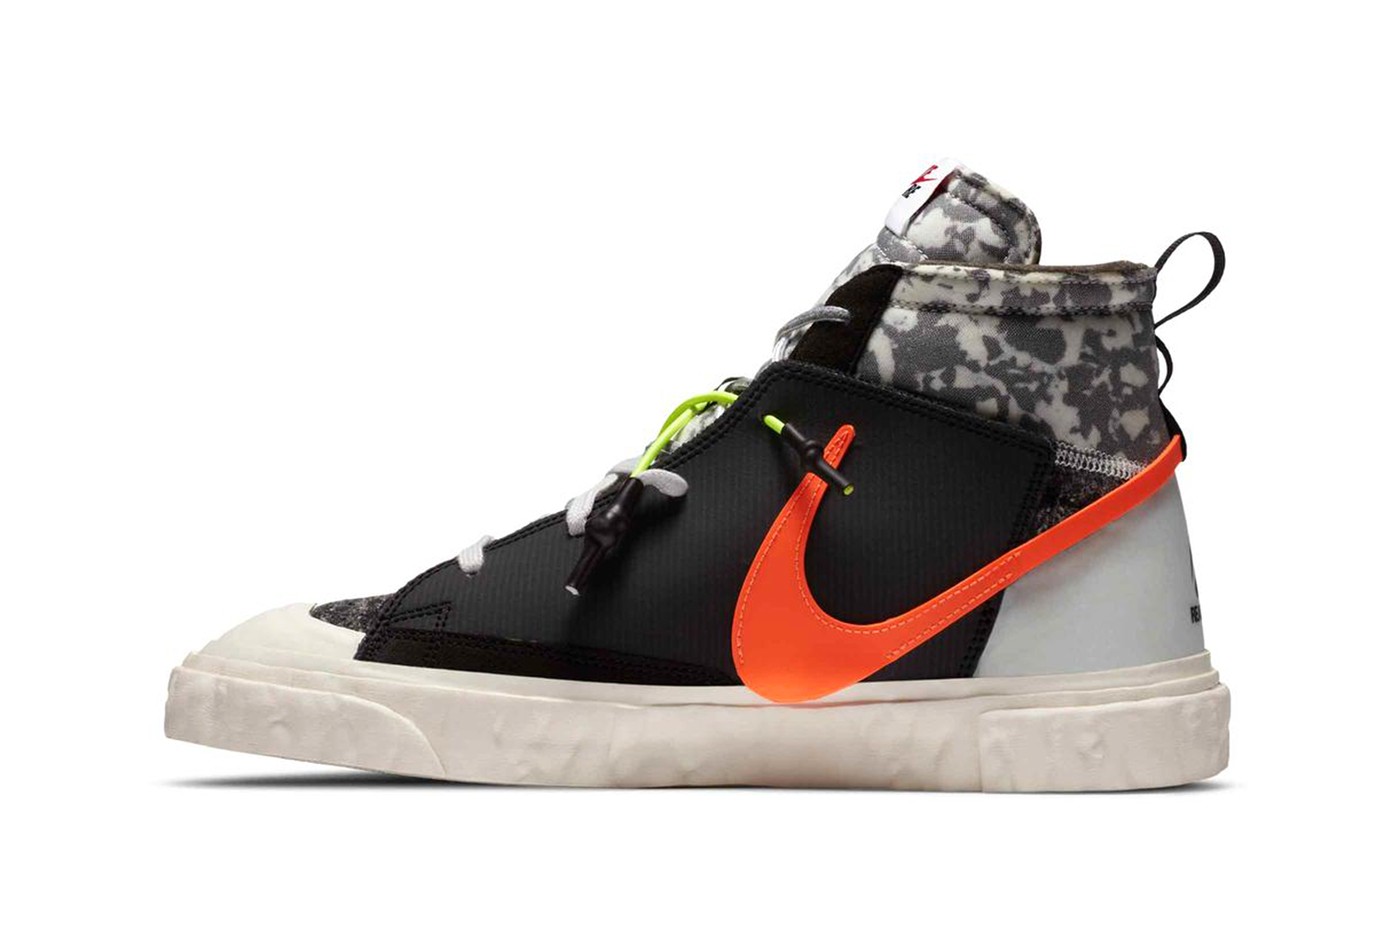 READYMADE x Nike Blazer Mid 最新联名鞋款官方图辑、发售情报正式发布